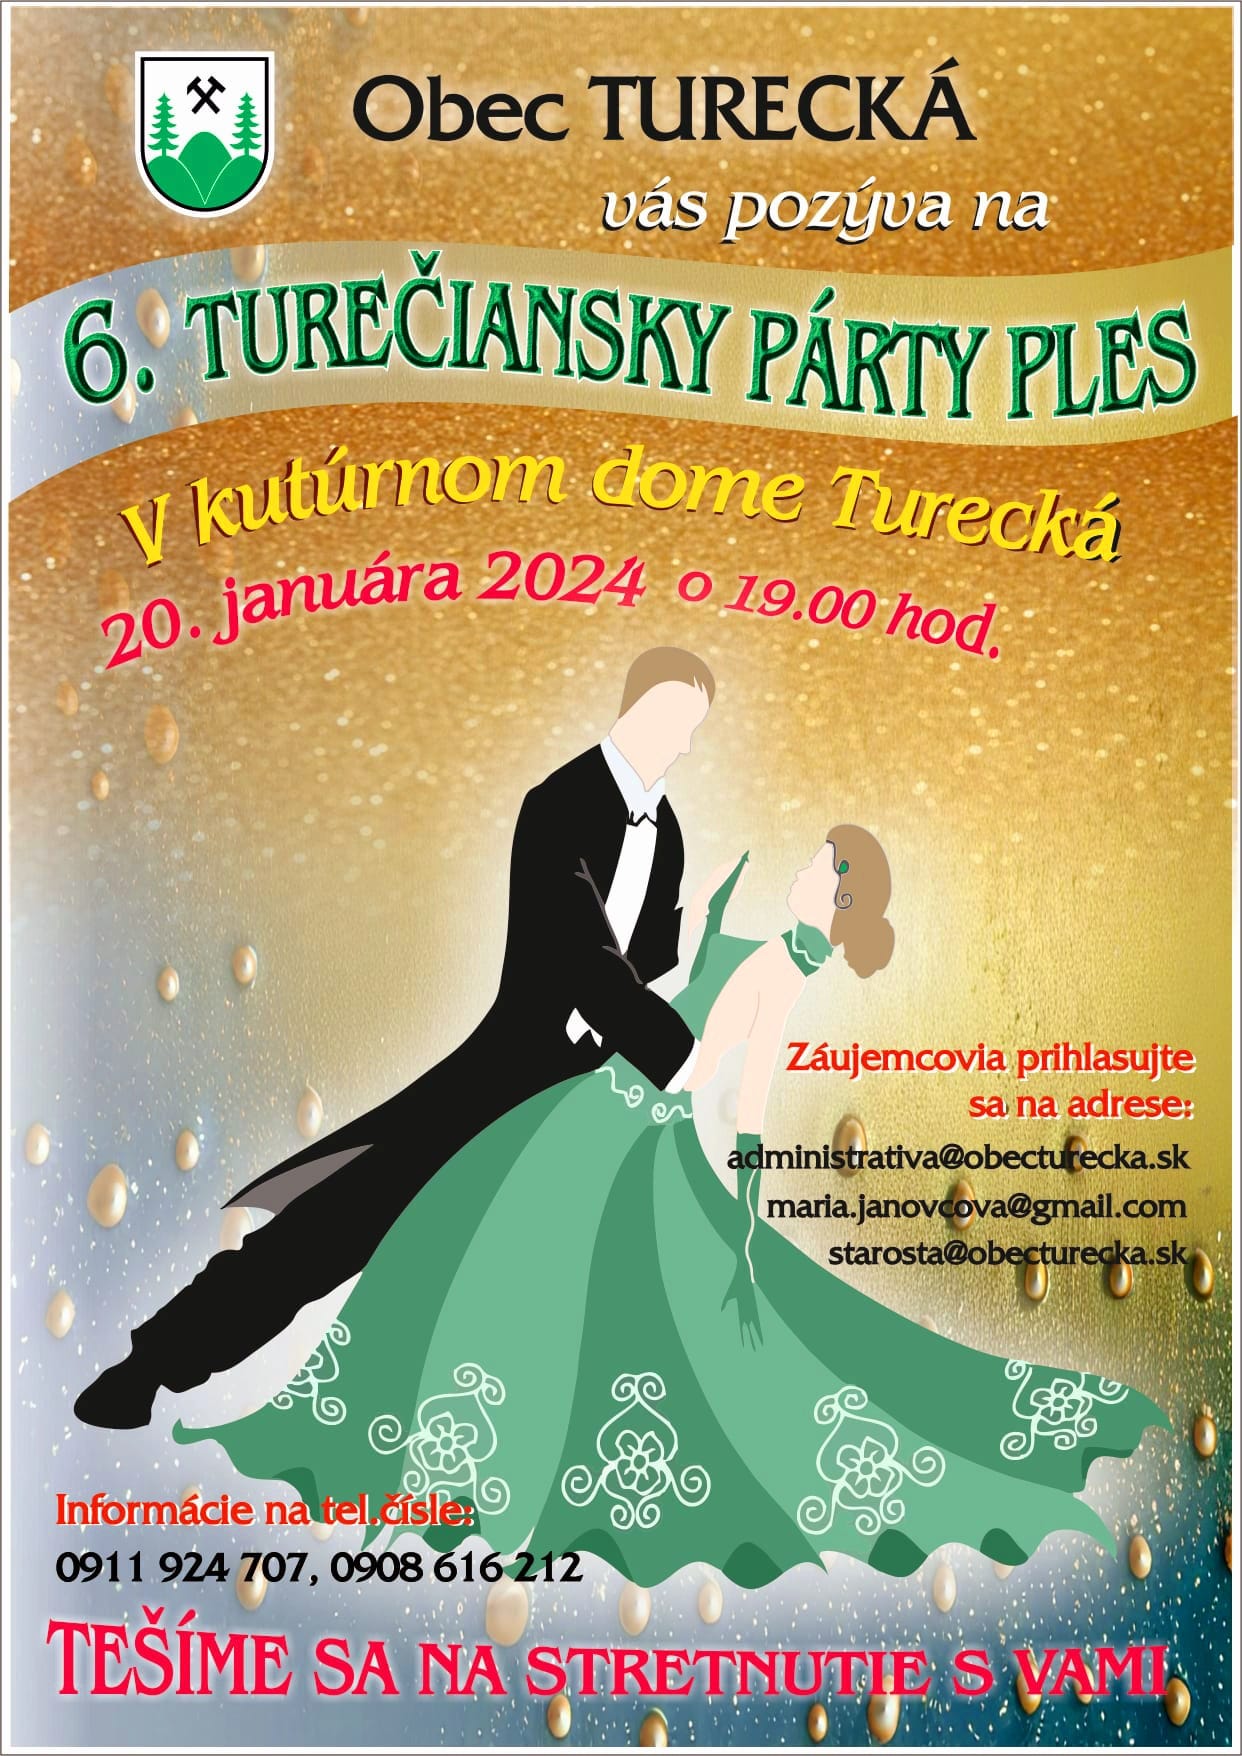 6. Tureiansky prty ples 2024 Tureck